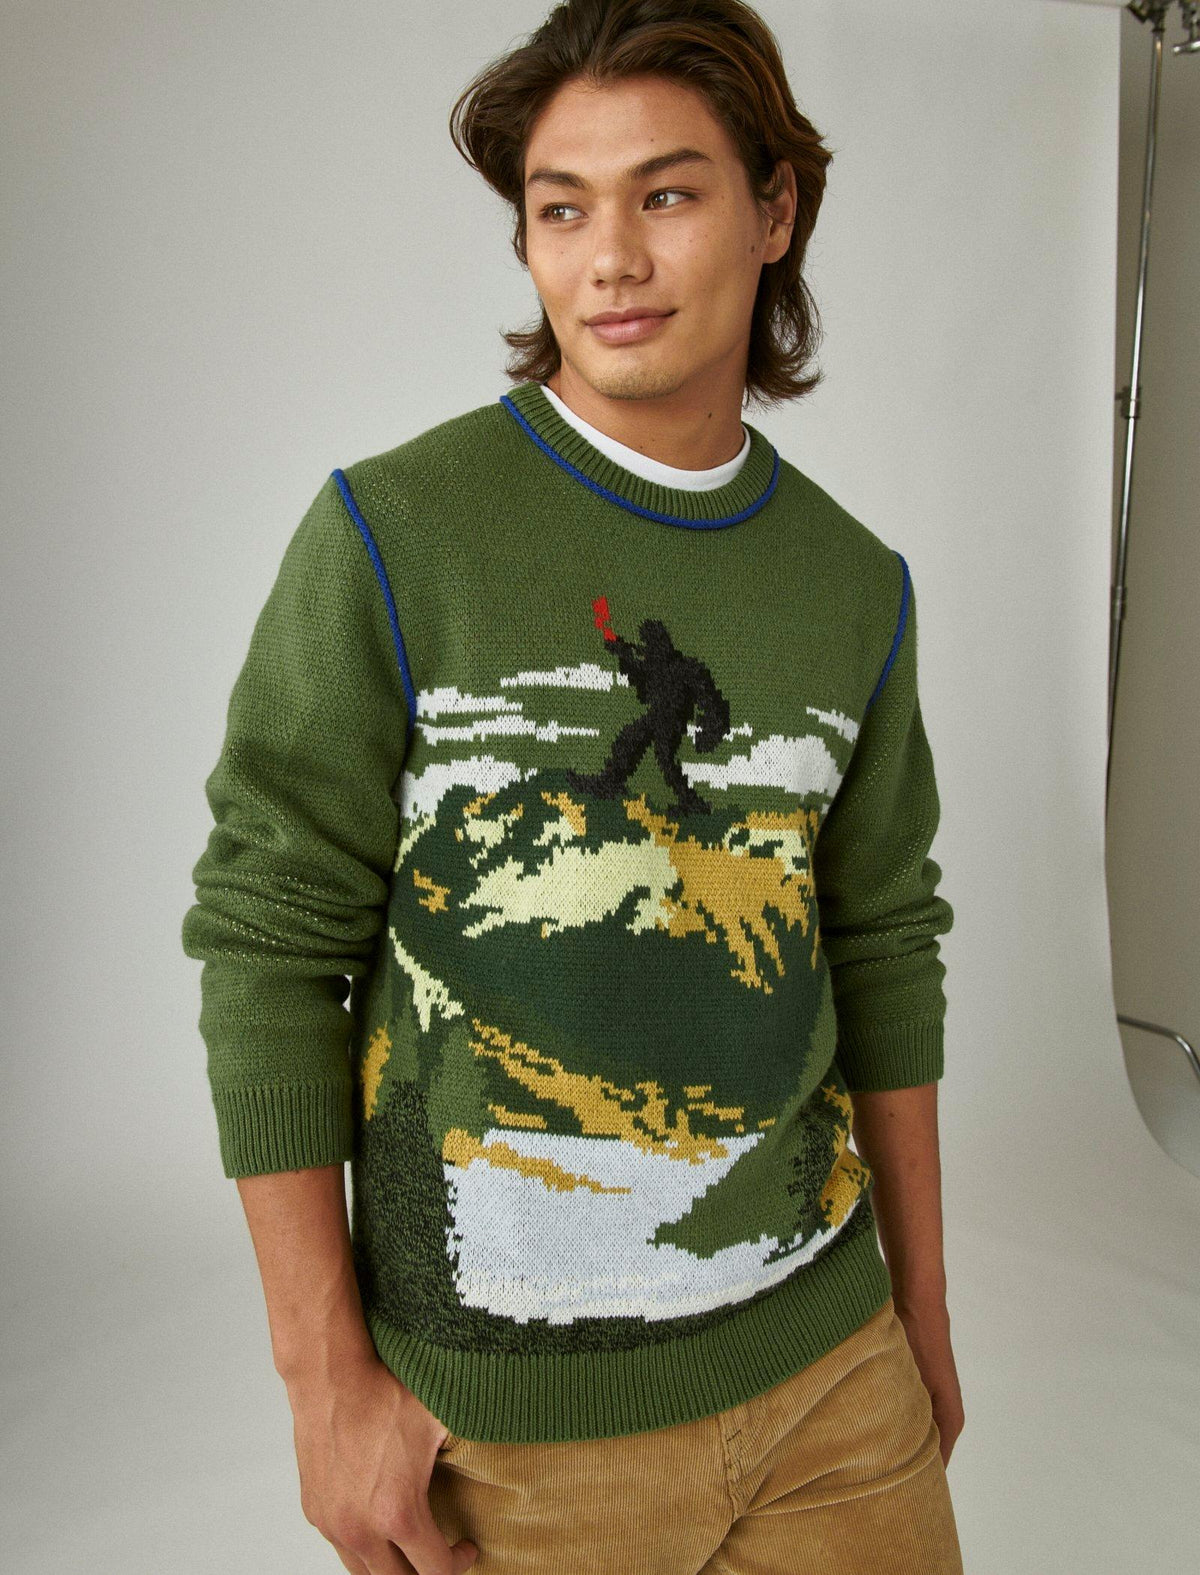 Lucky Brand Intarsia Crew Neck Sweater - Men's Clothing Outerwear Tops Sweatshirts Crewneck Hoodies Winter Moss Combo